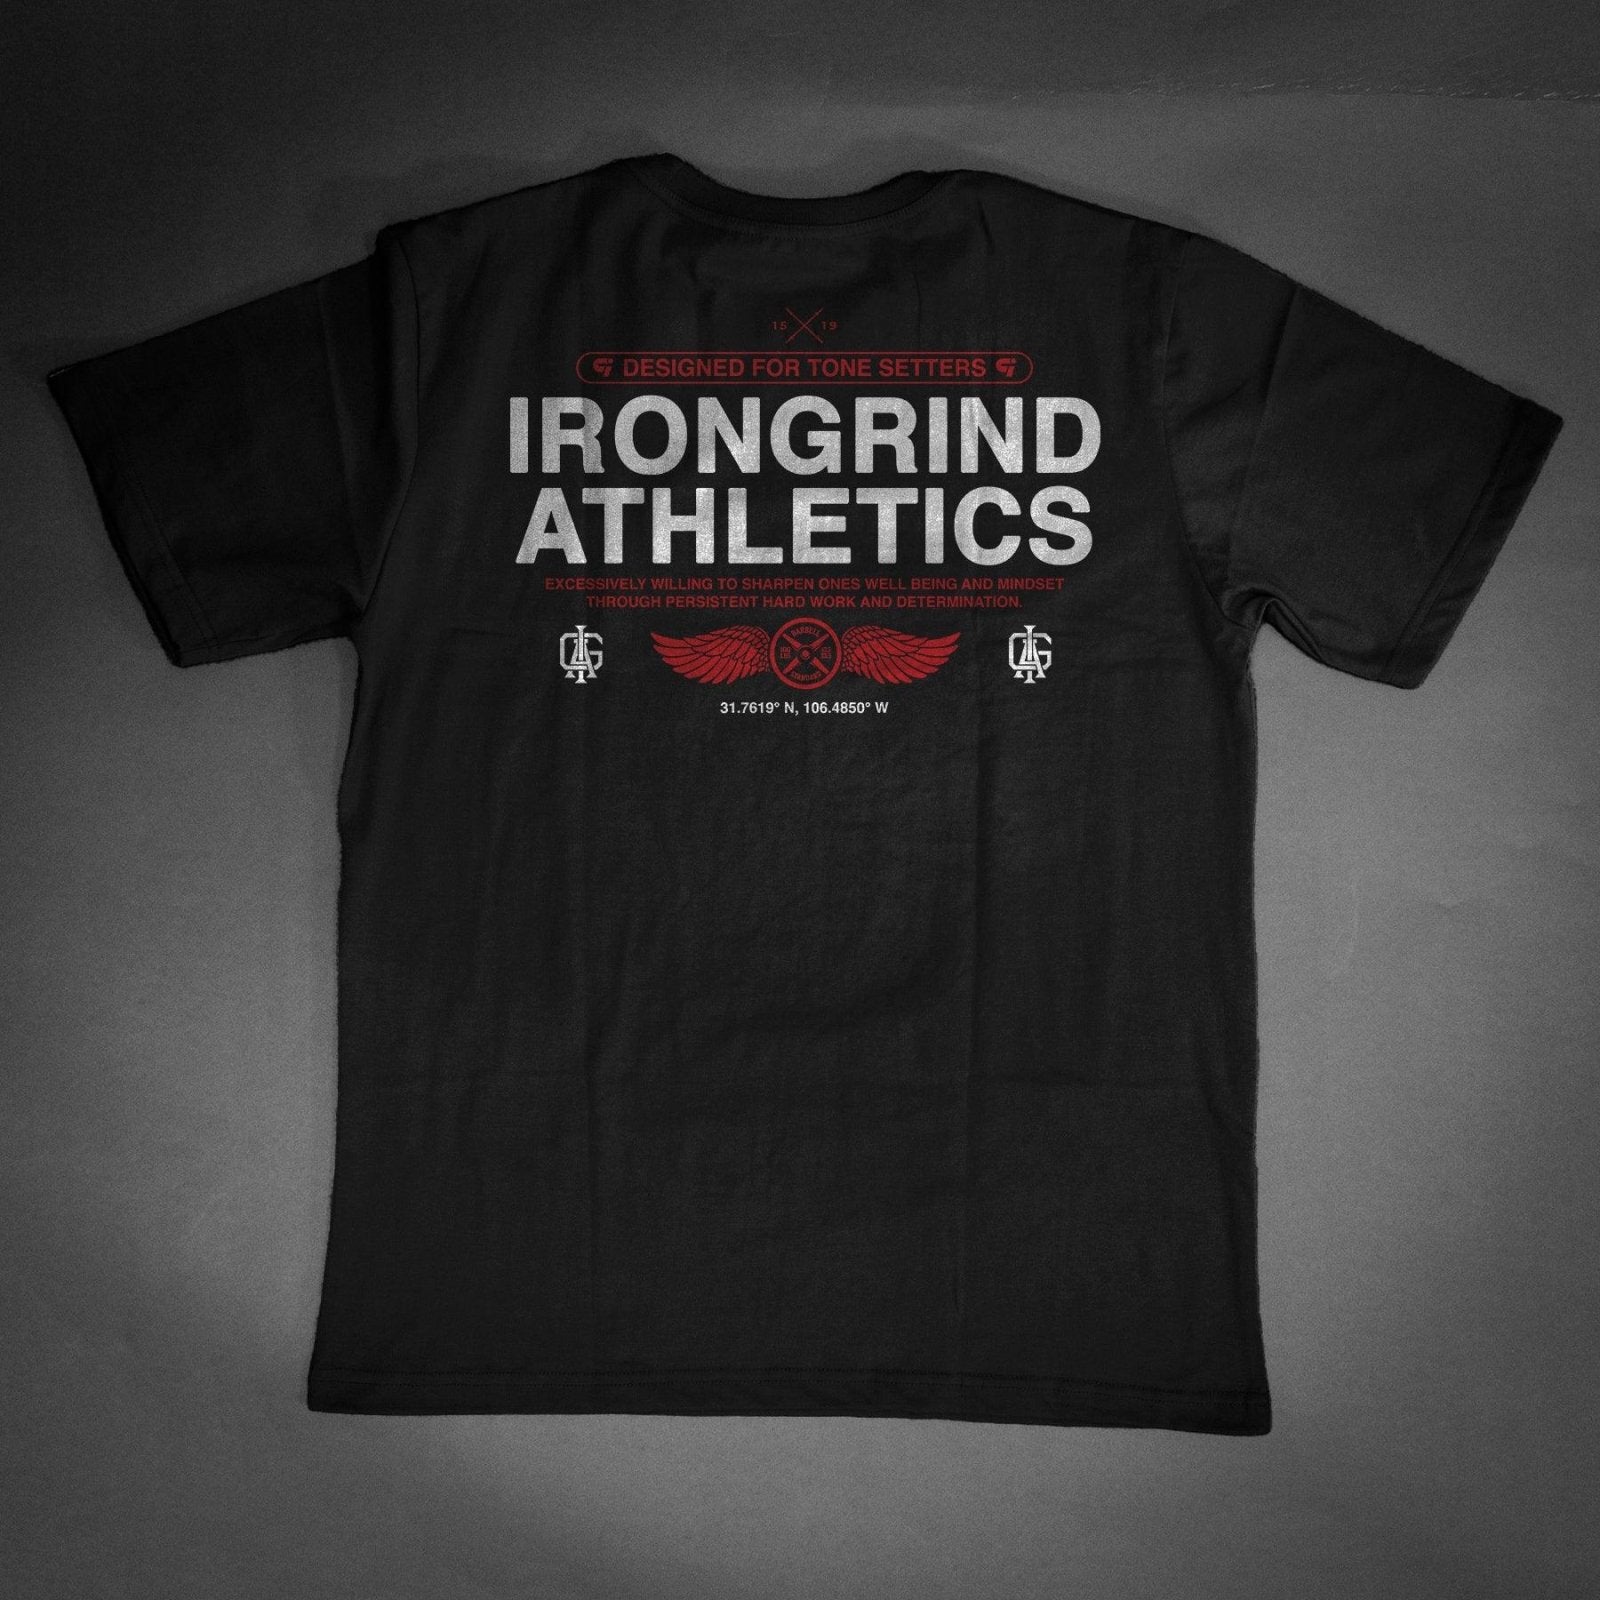 Triumph 'Designed For' T-Shirt - IronGrind Athletics - activewear - gymshark - alphalete